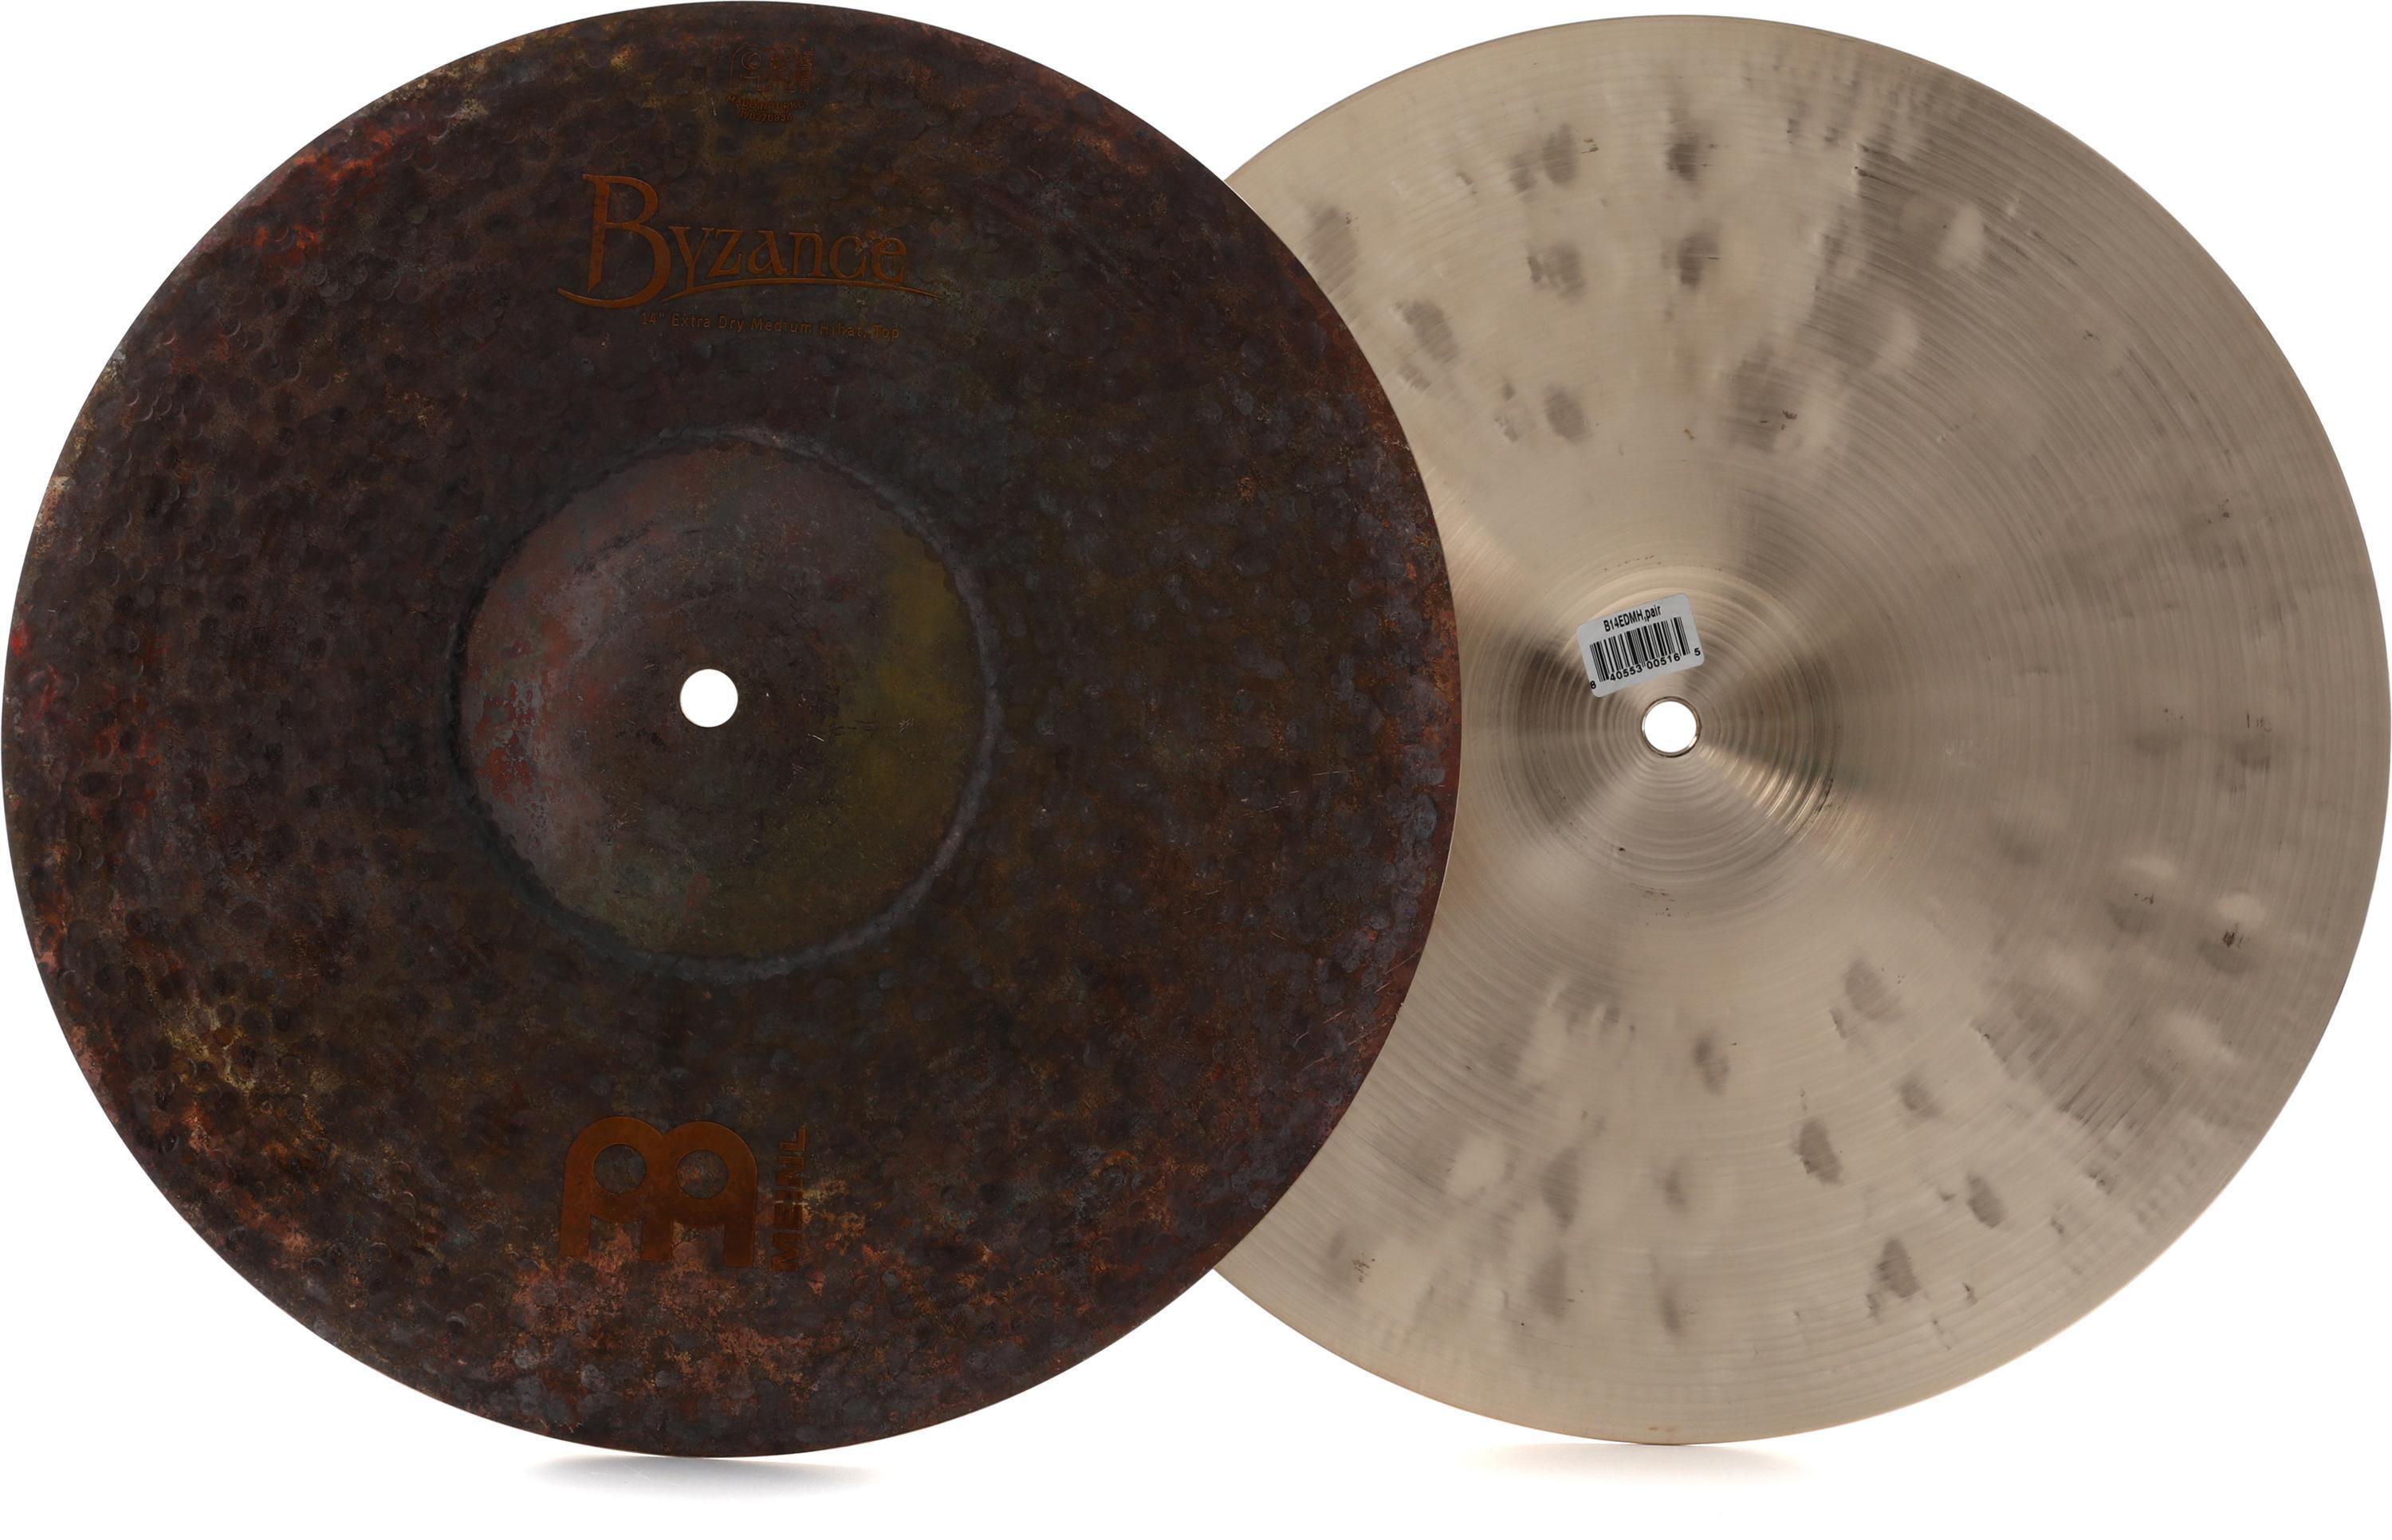 Meinl Cymbals 16 inch Byzance Extra Dry Medium Thin Hi-hat Cymbals 